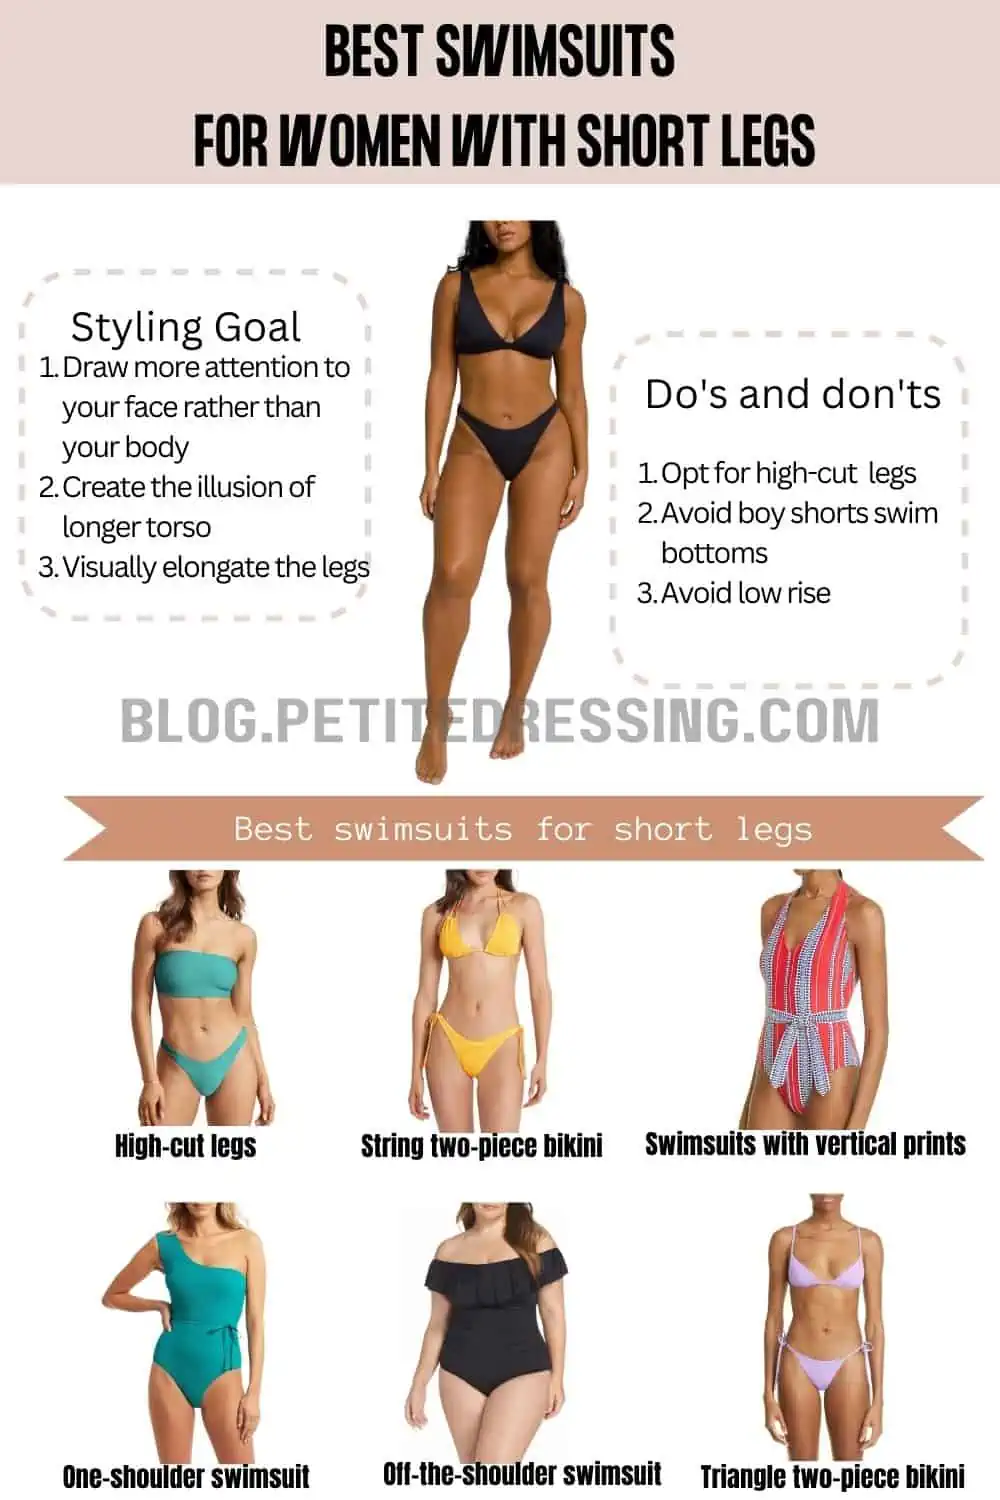 Bikini bottom style guide